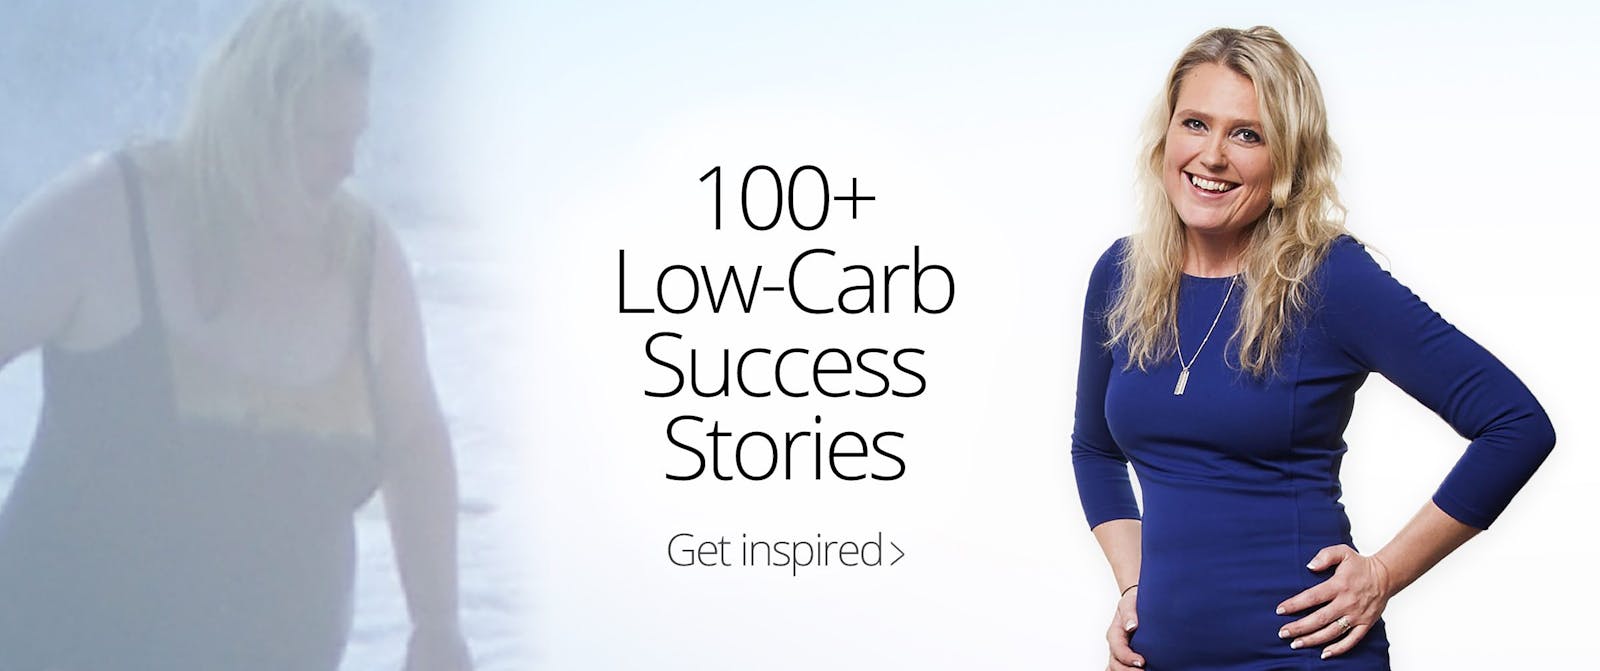 Low-Carb Success Stories